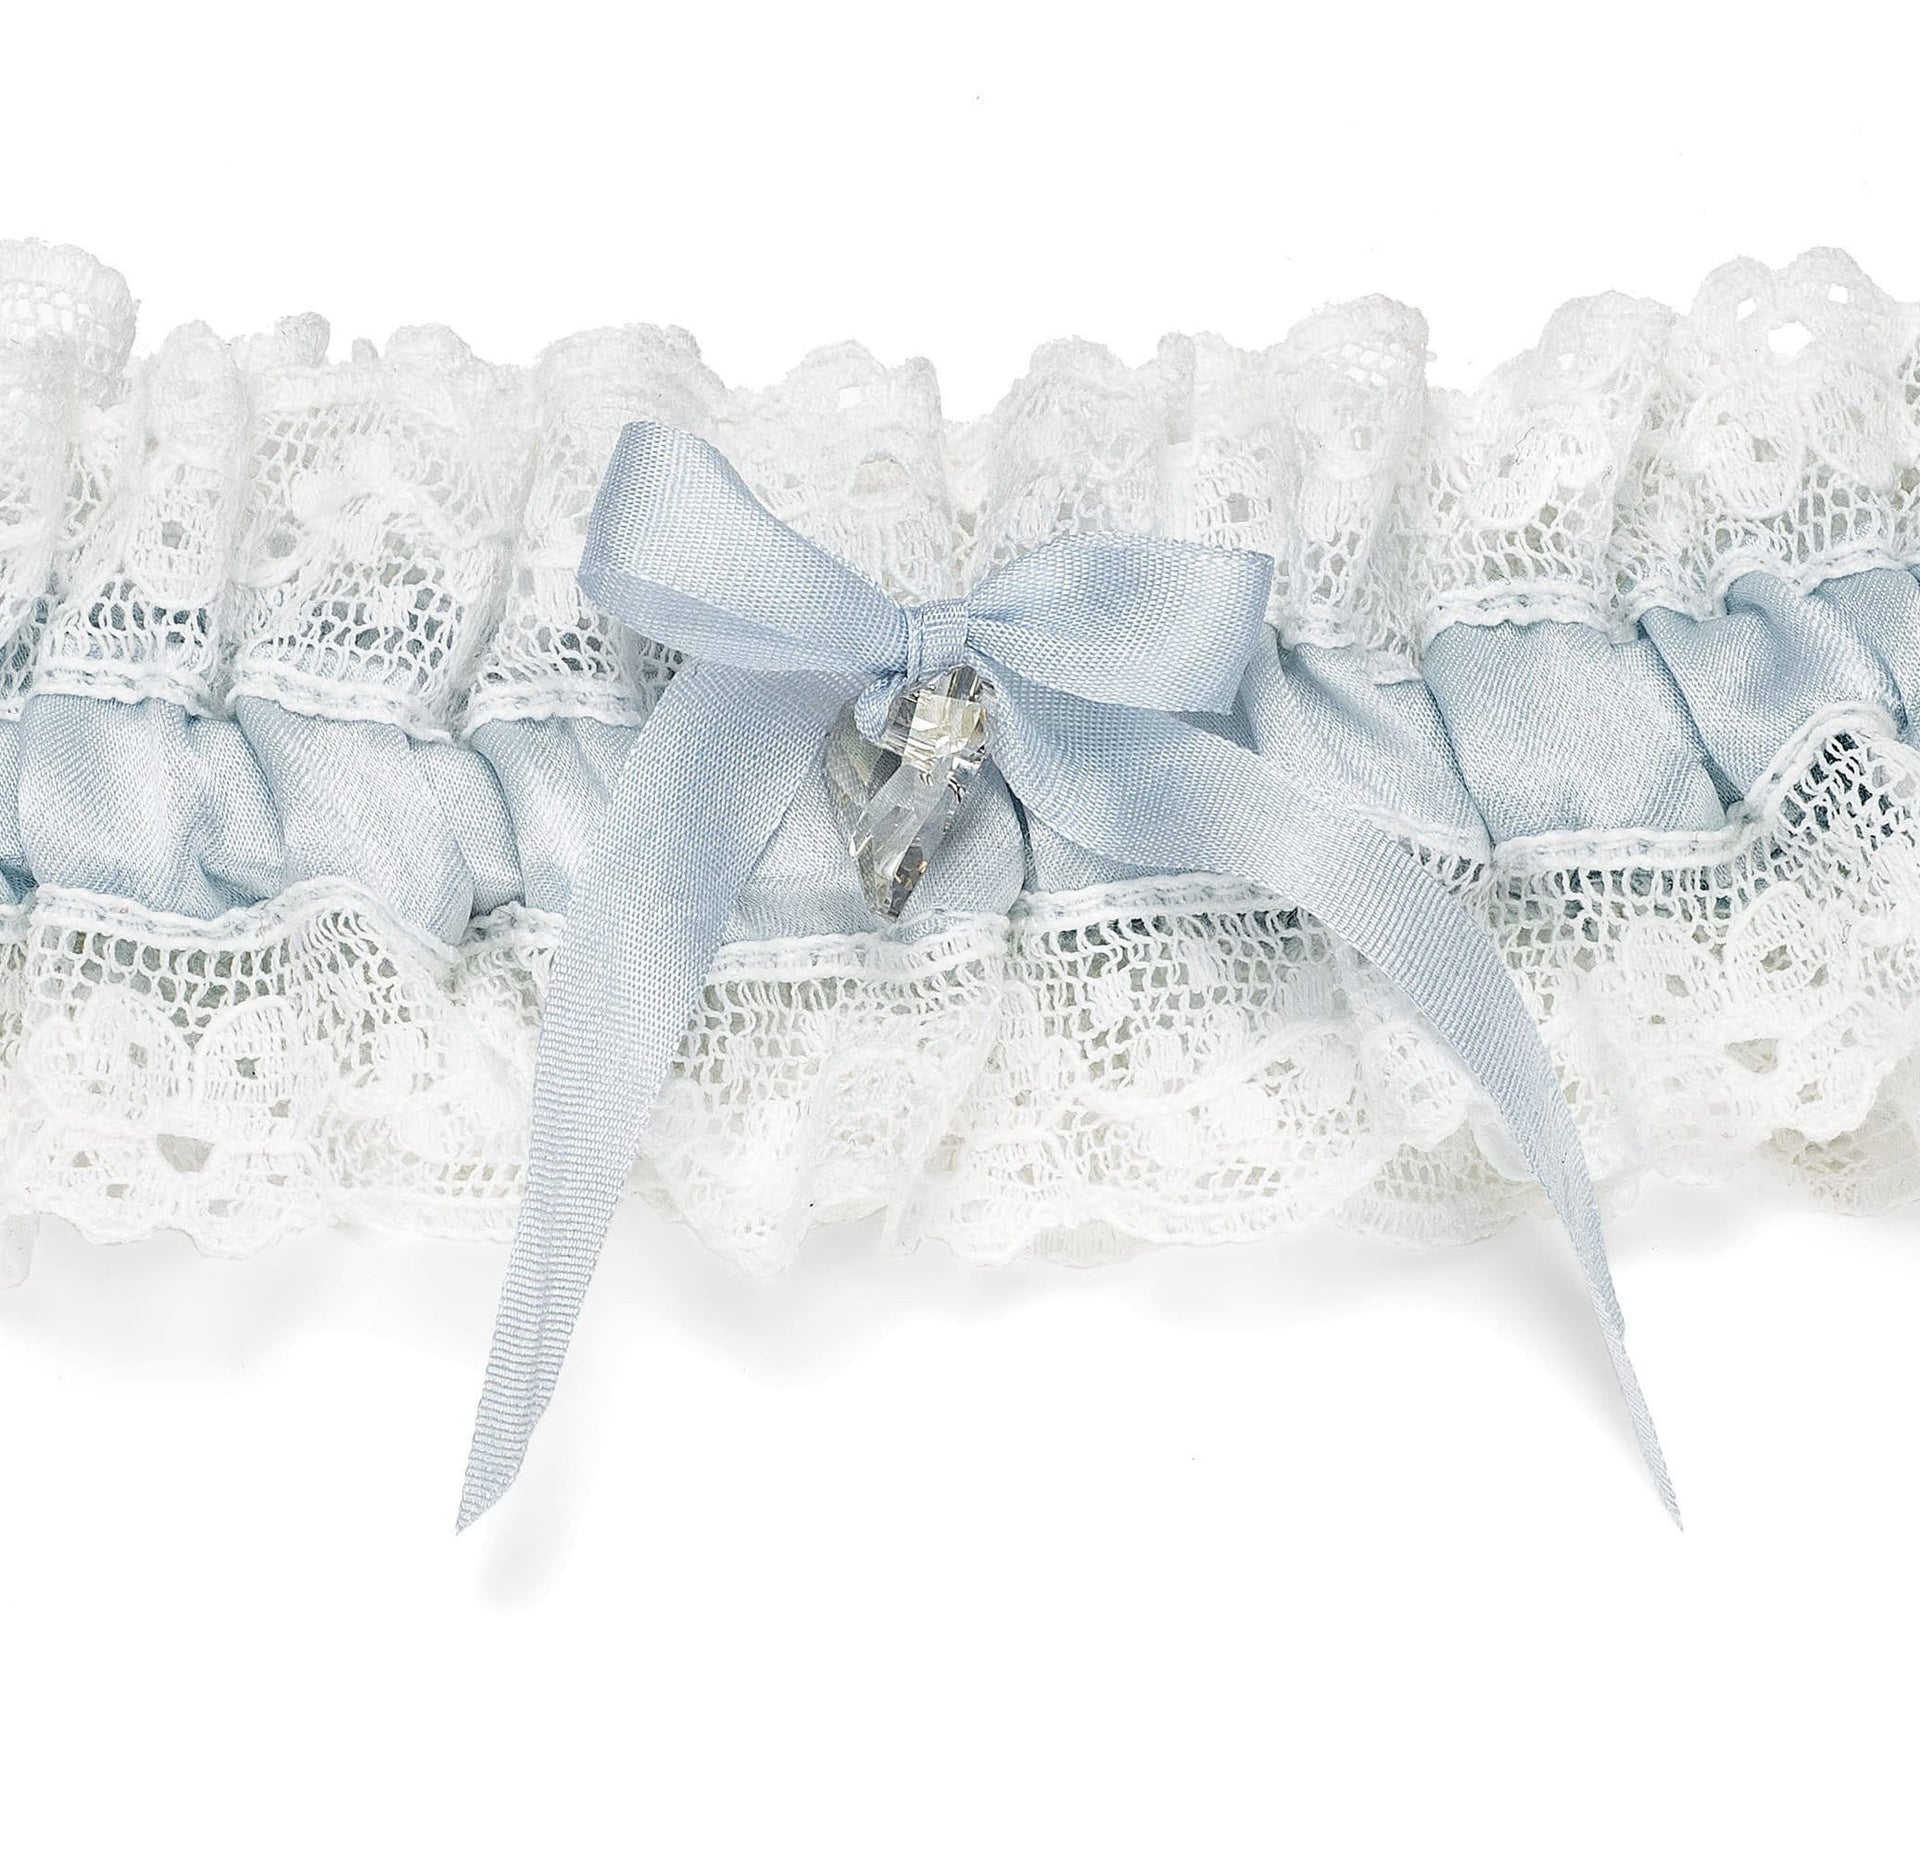 Silk bow blue wedding garters UK, handmade in Truro Cornwall